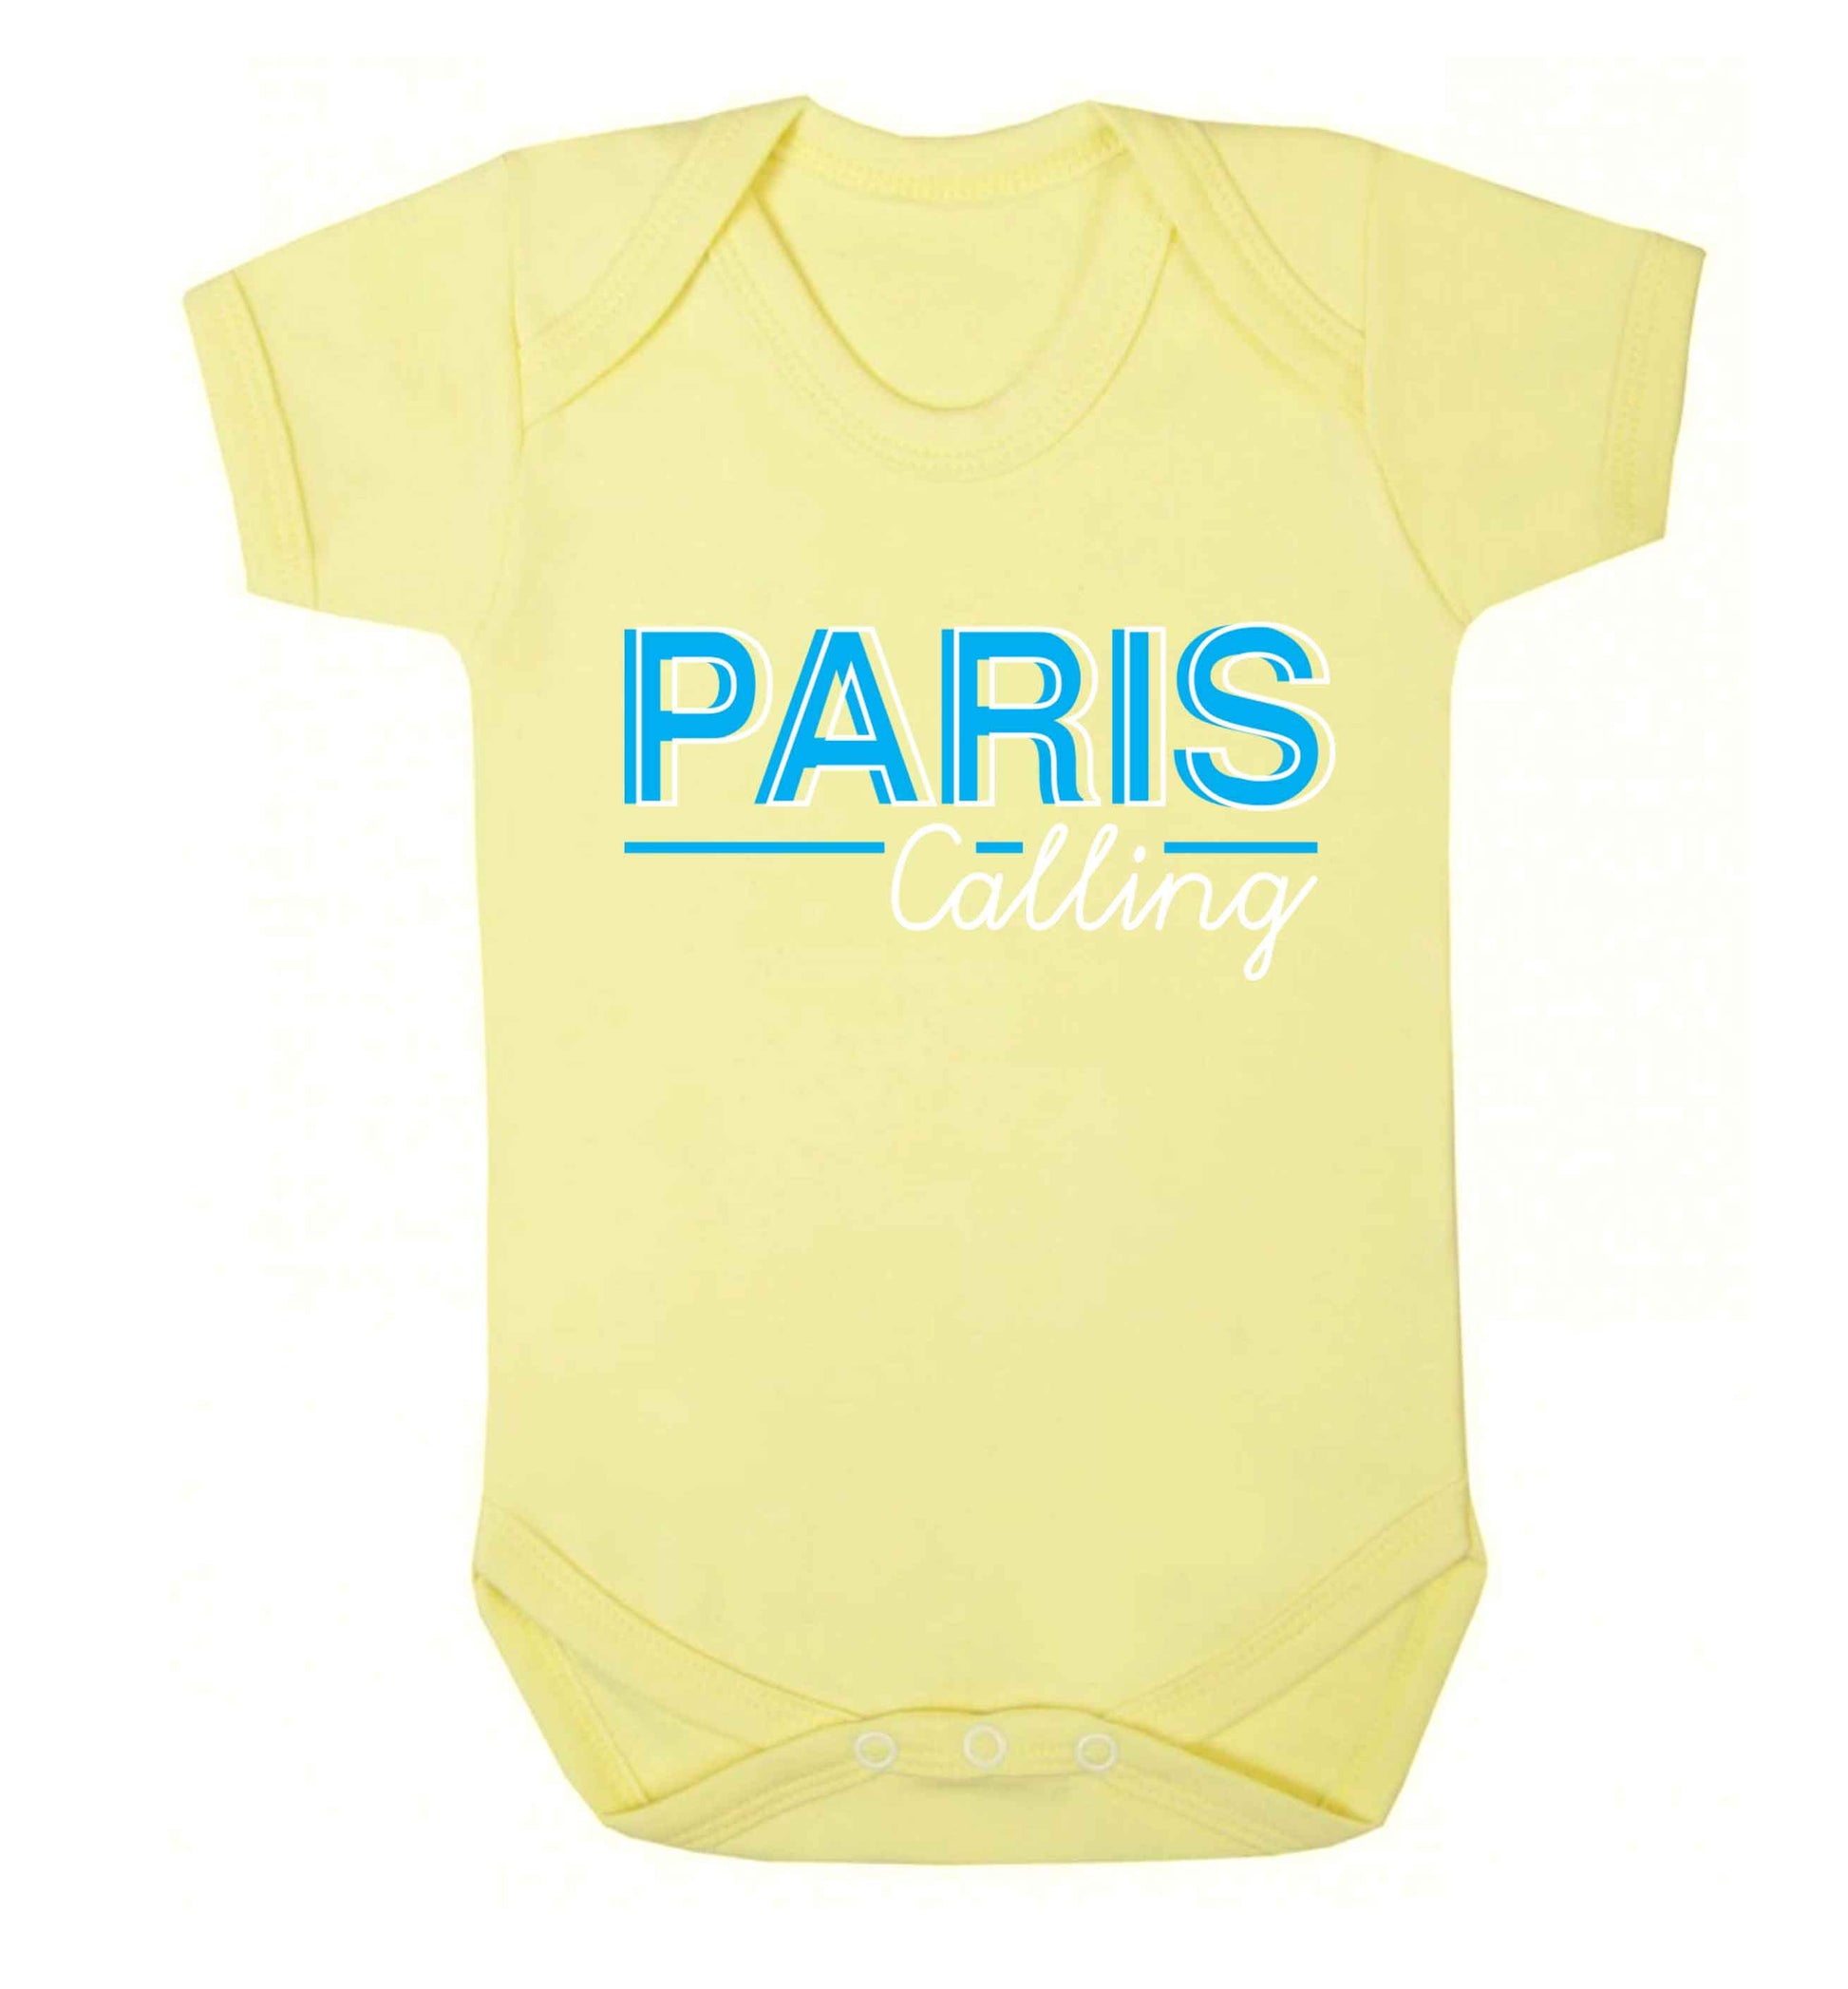 Paris calling Baby Vest pale yellow 18-24 months